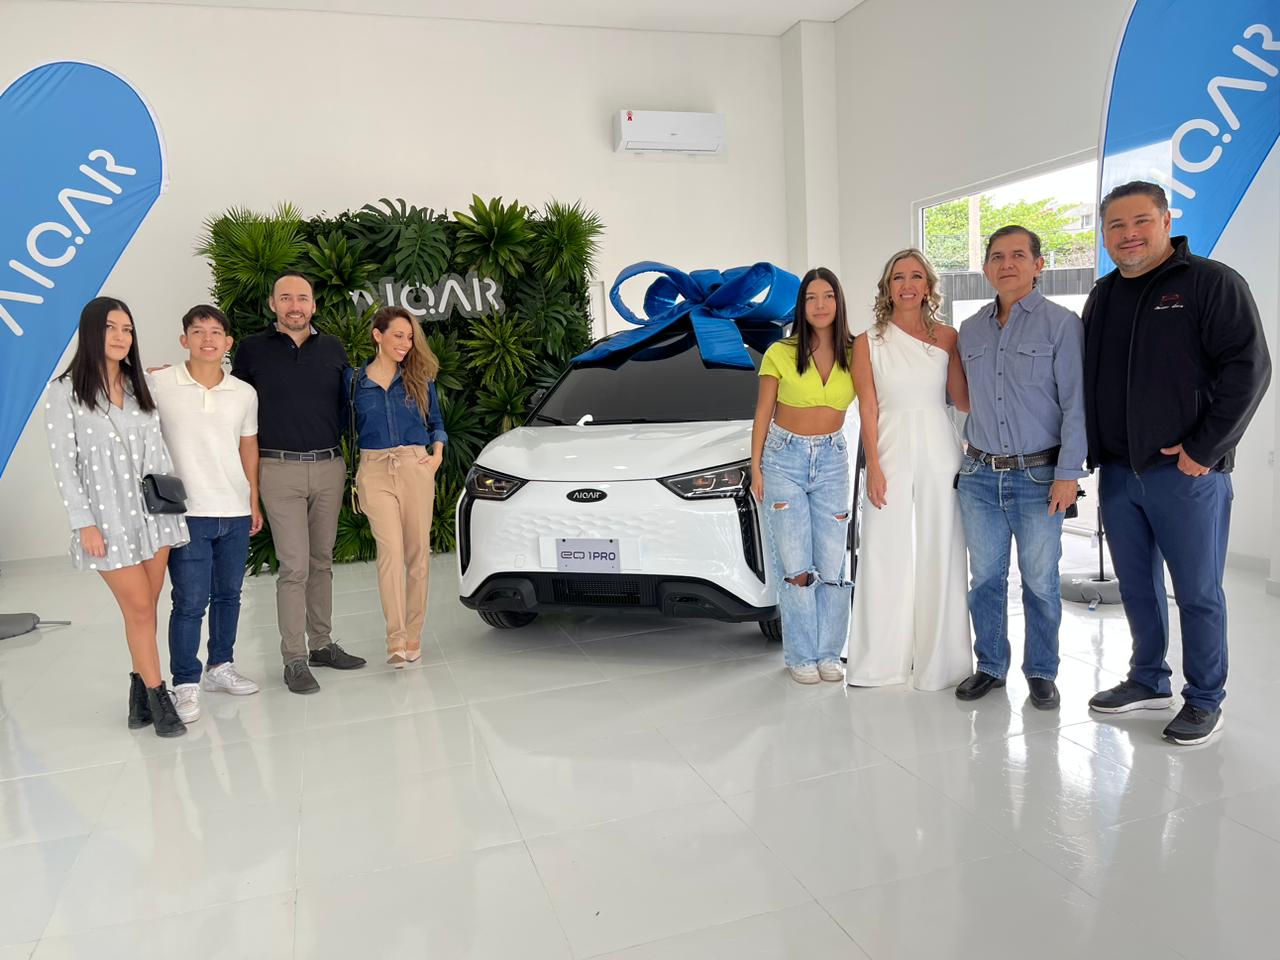 Ganadora del sorteo de “Súper Cars” recibe el auto eléctrico EQ1 Pro de la marca Aiqar